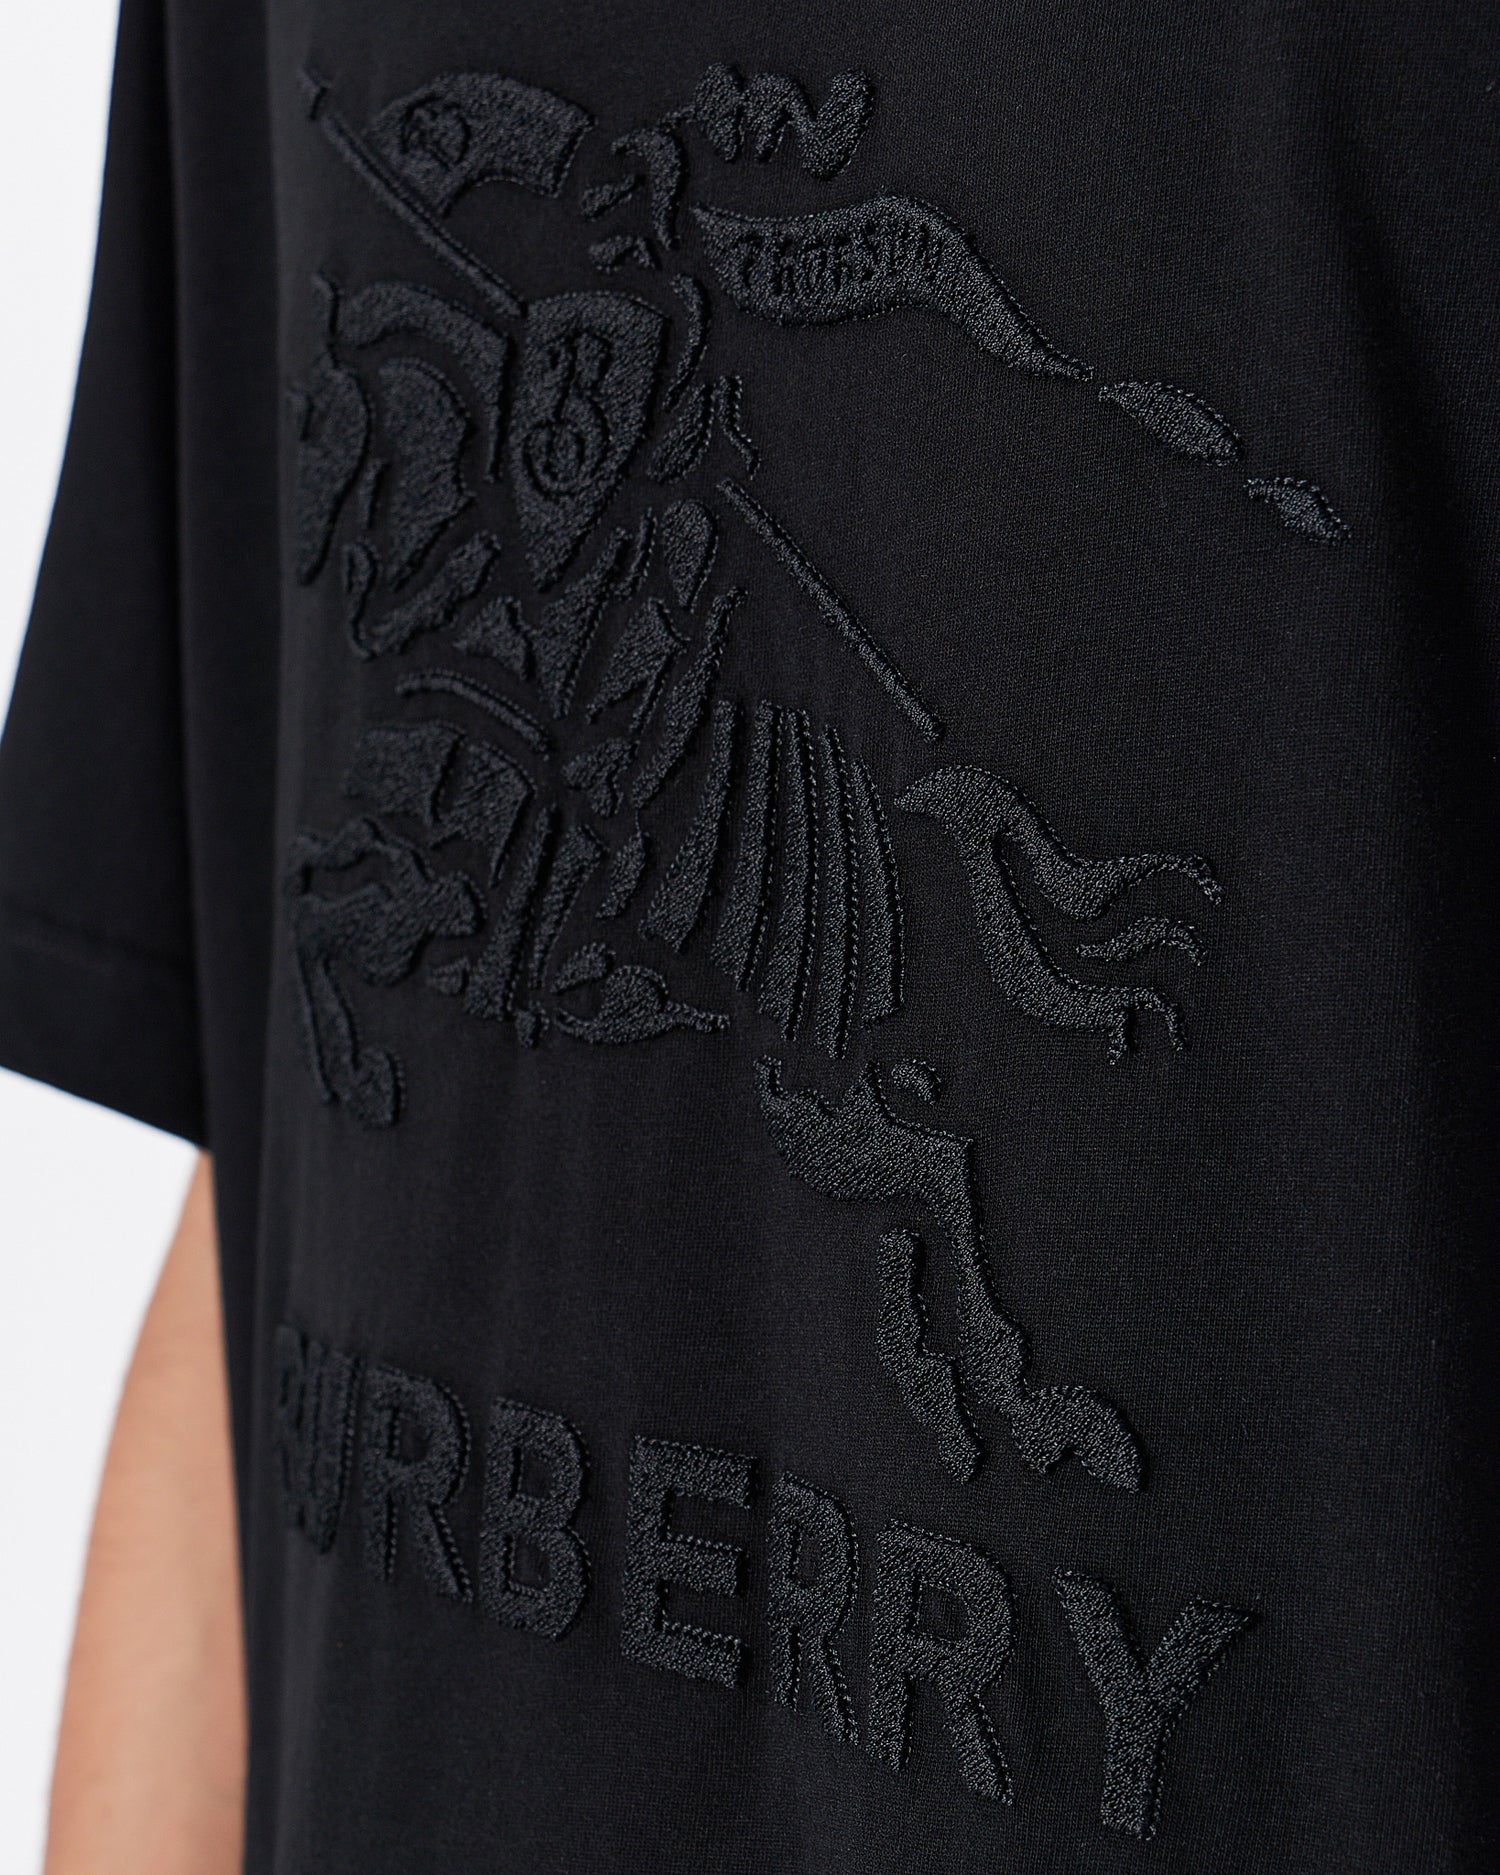 BUR Establish Horse Embroidered Men Black T-Shirt 54.90